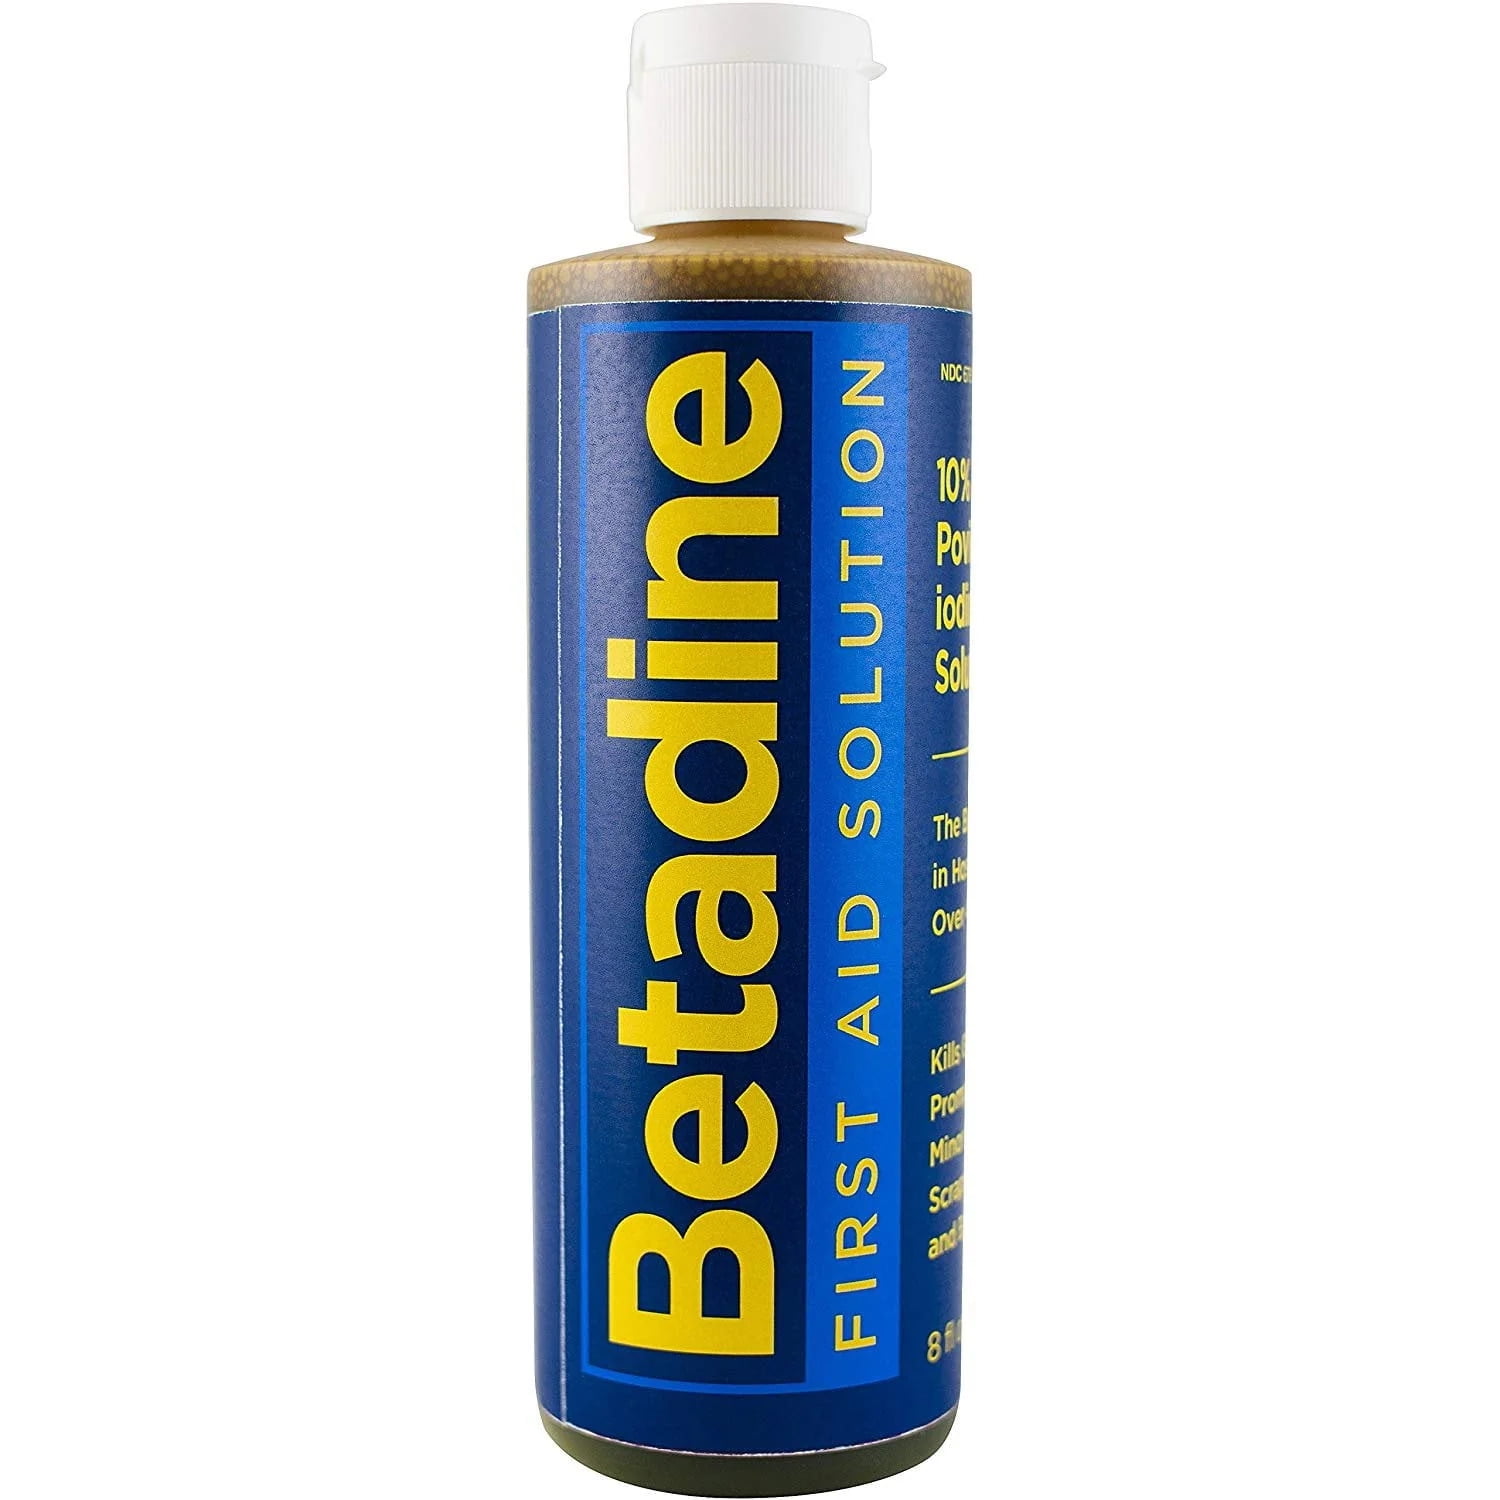 Betadine Antiseptic First Aid Solution Povidone-Iodine 10%, 6 oz